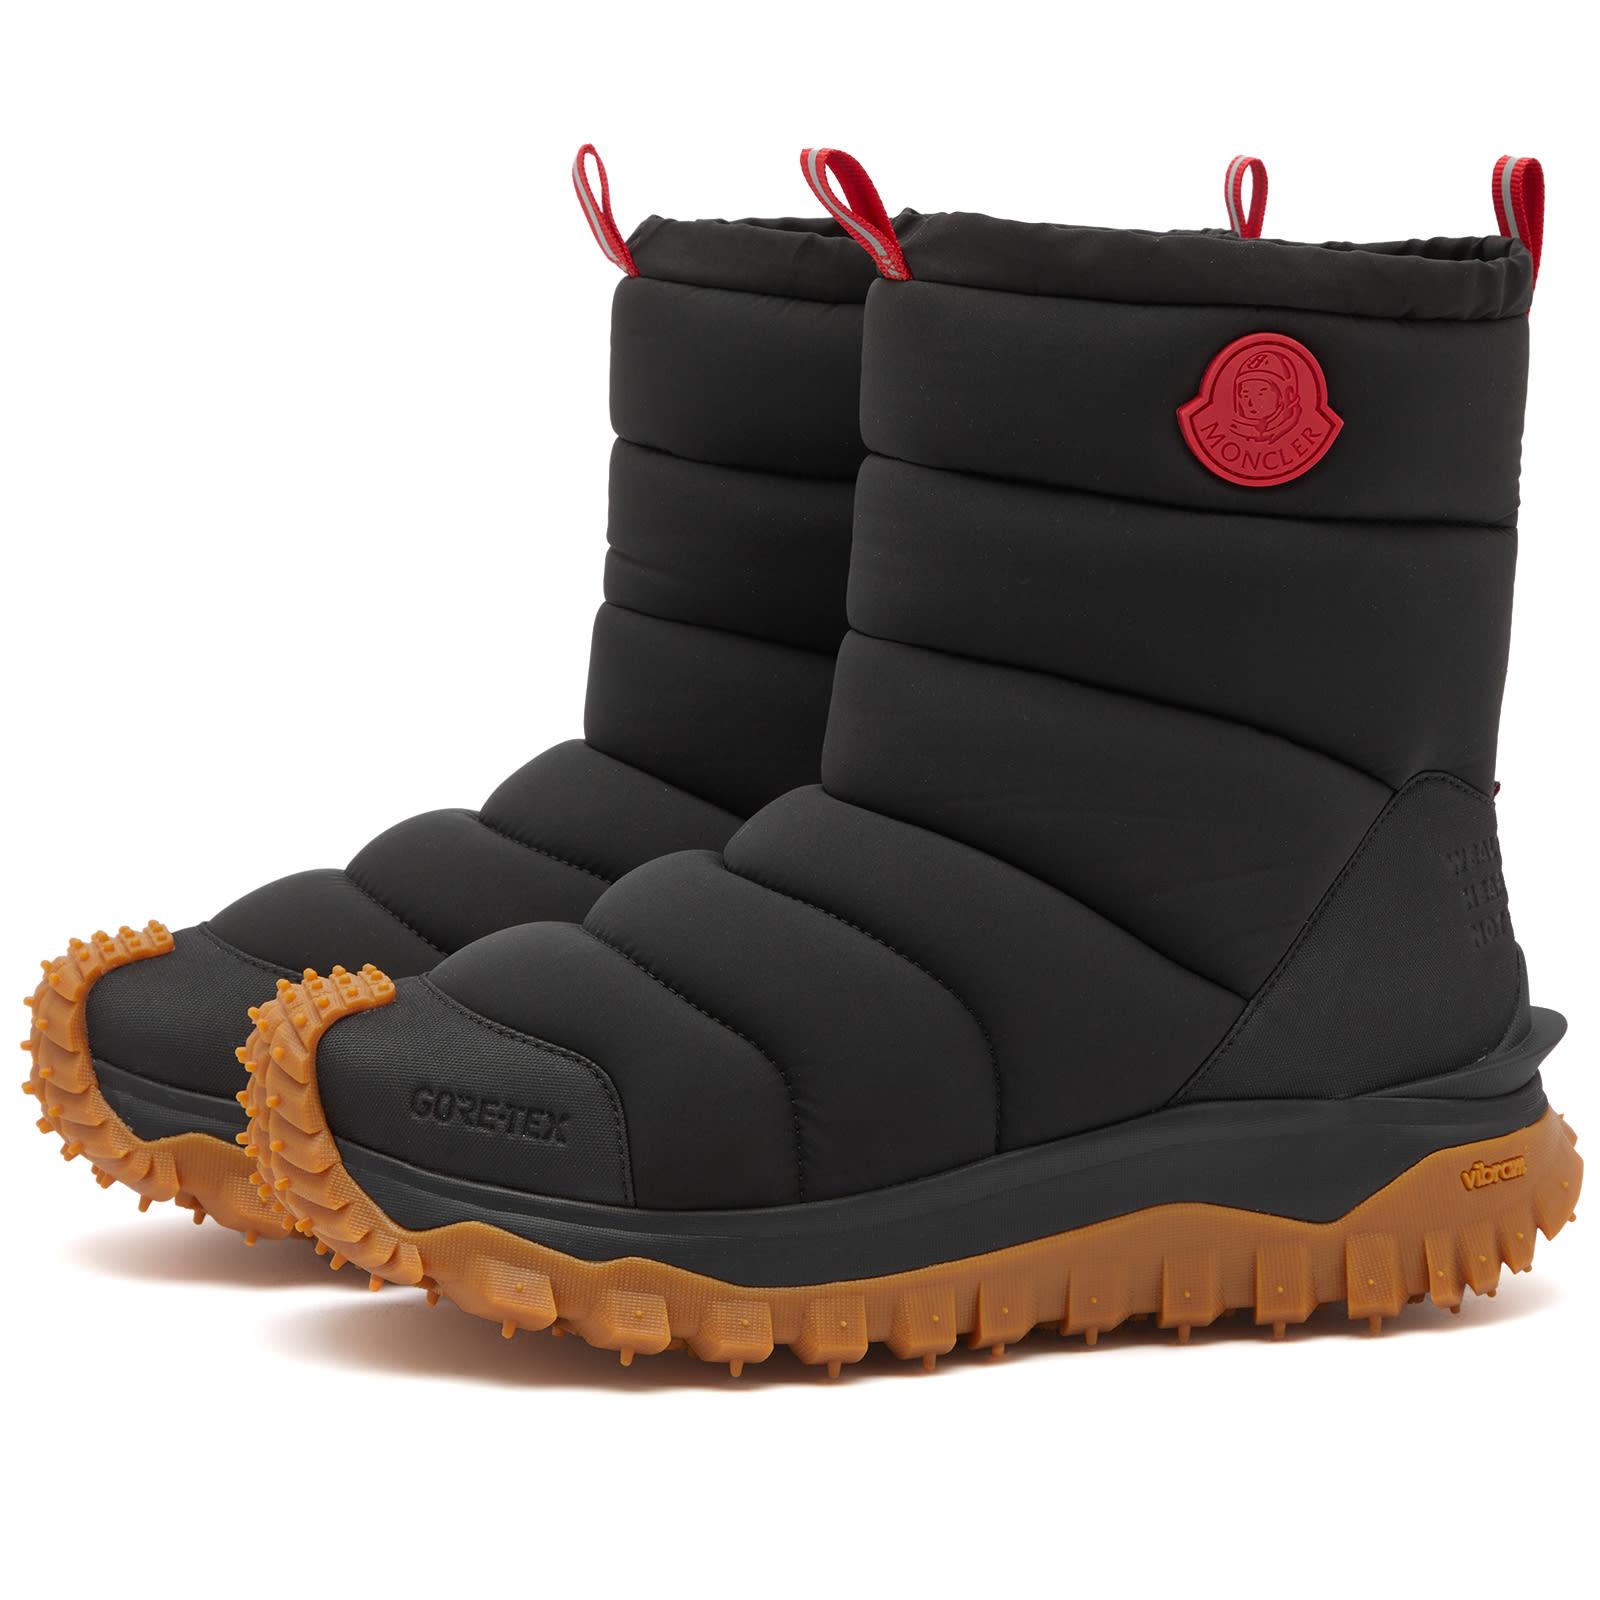 Moncler Genius X Bbc Apres Trail Snow Boots in Black for Men | Lyst UK